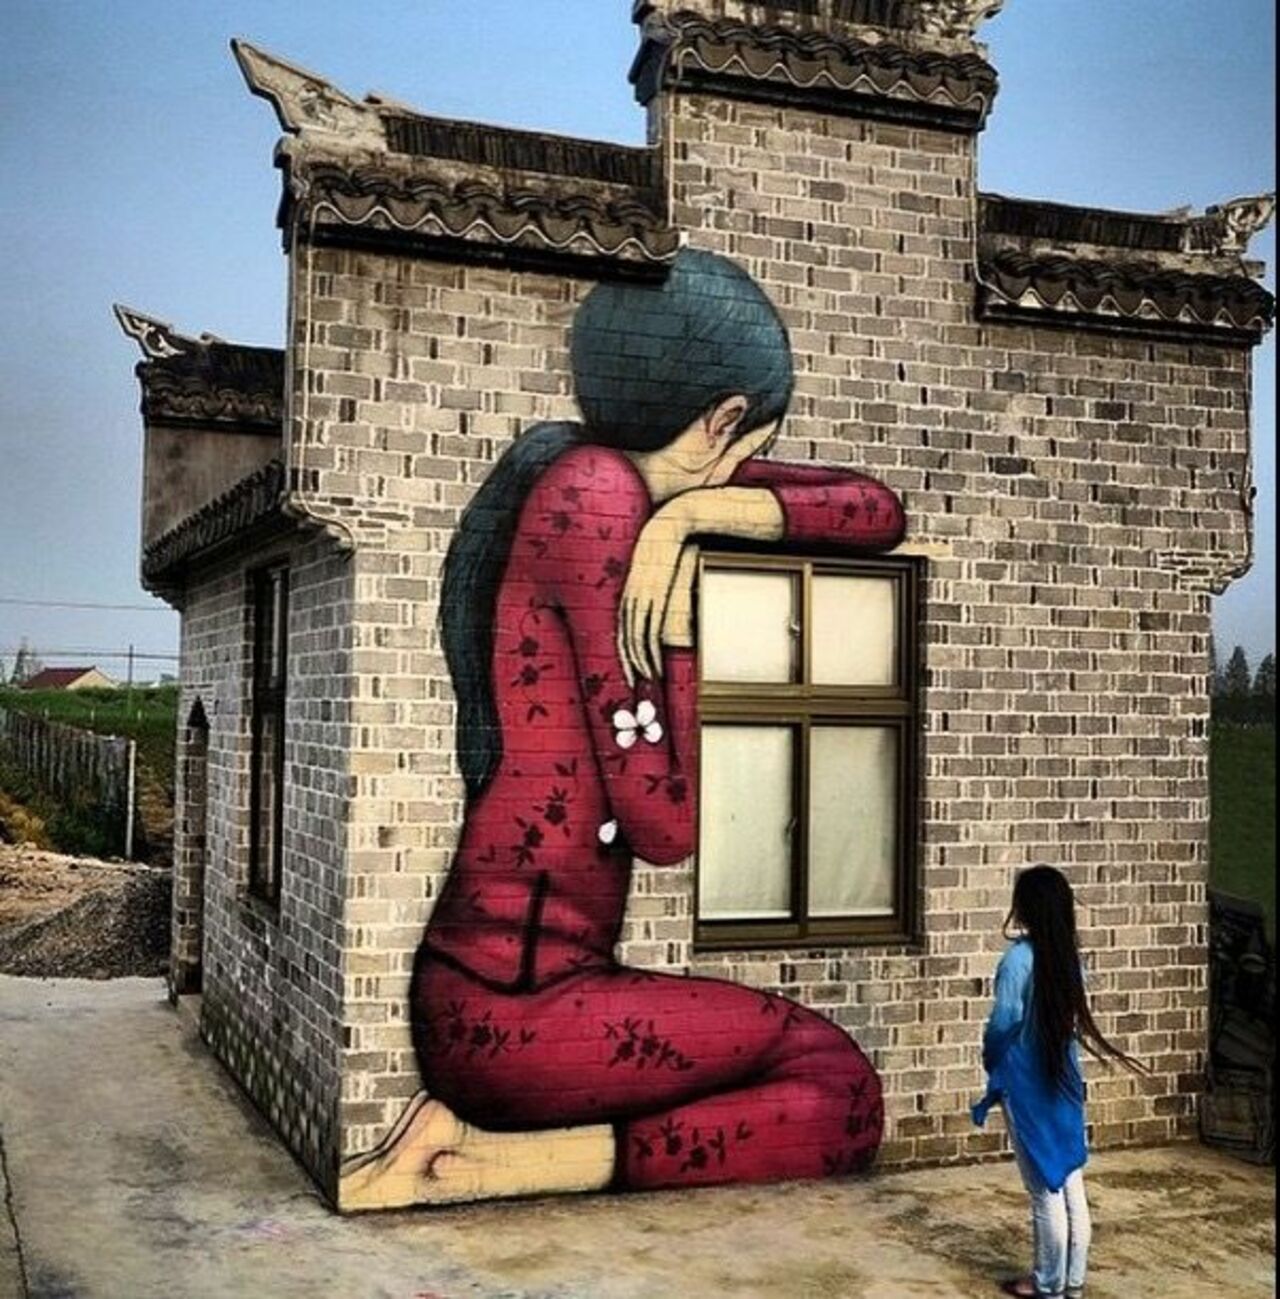 Seth Globepainter - "Plum Blossom", Fengzing, China#streetart #mural #graffiti #art https://t.co/NjX3lI6wJn